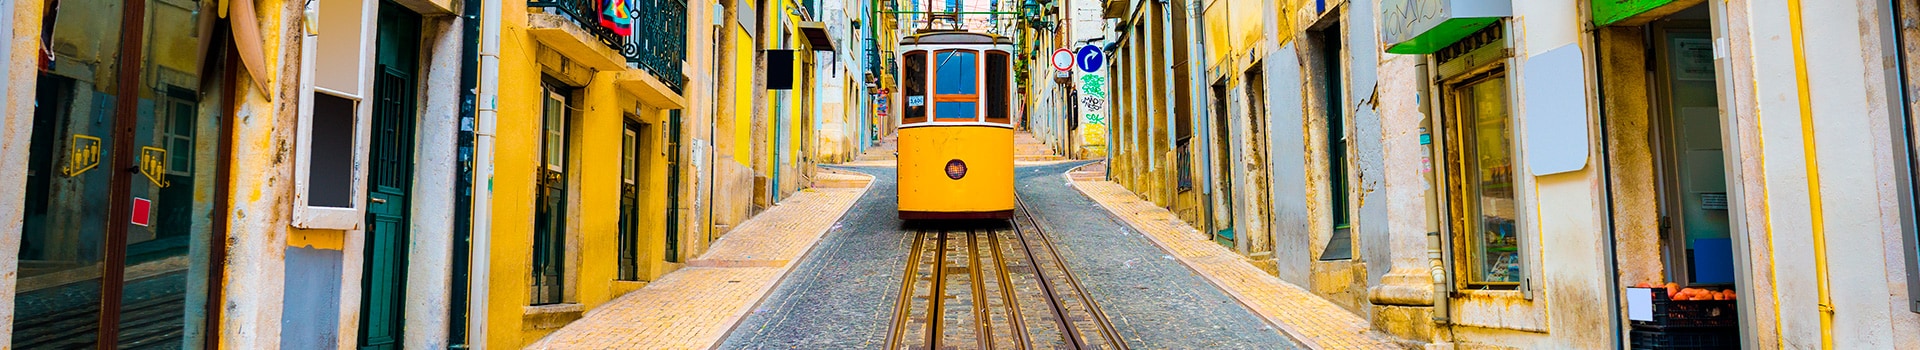 Porto - Lisbona